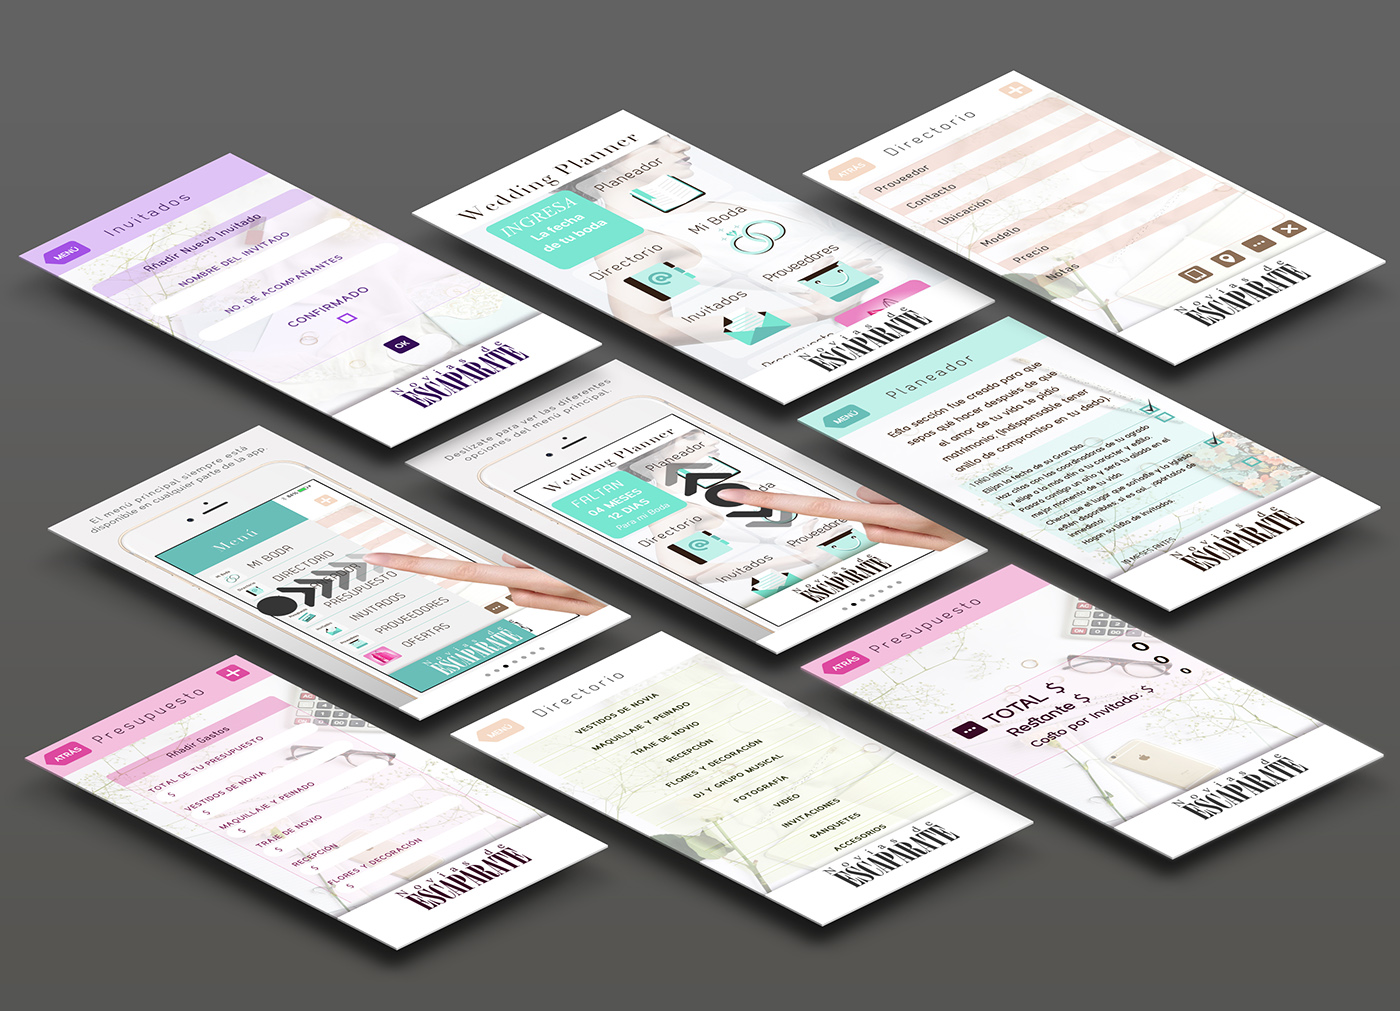 app wedding design user friendly wedding app appstore